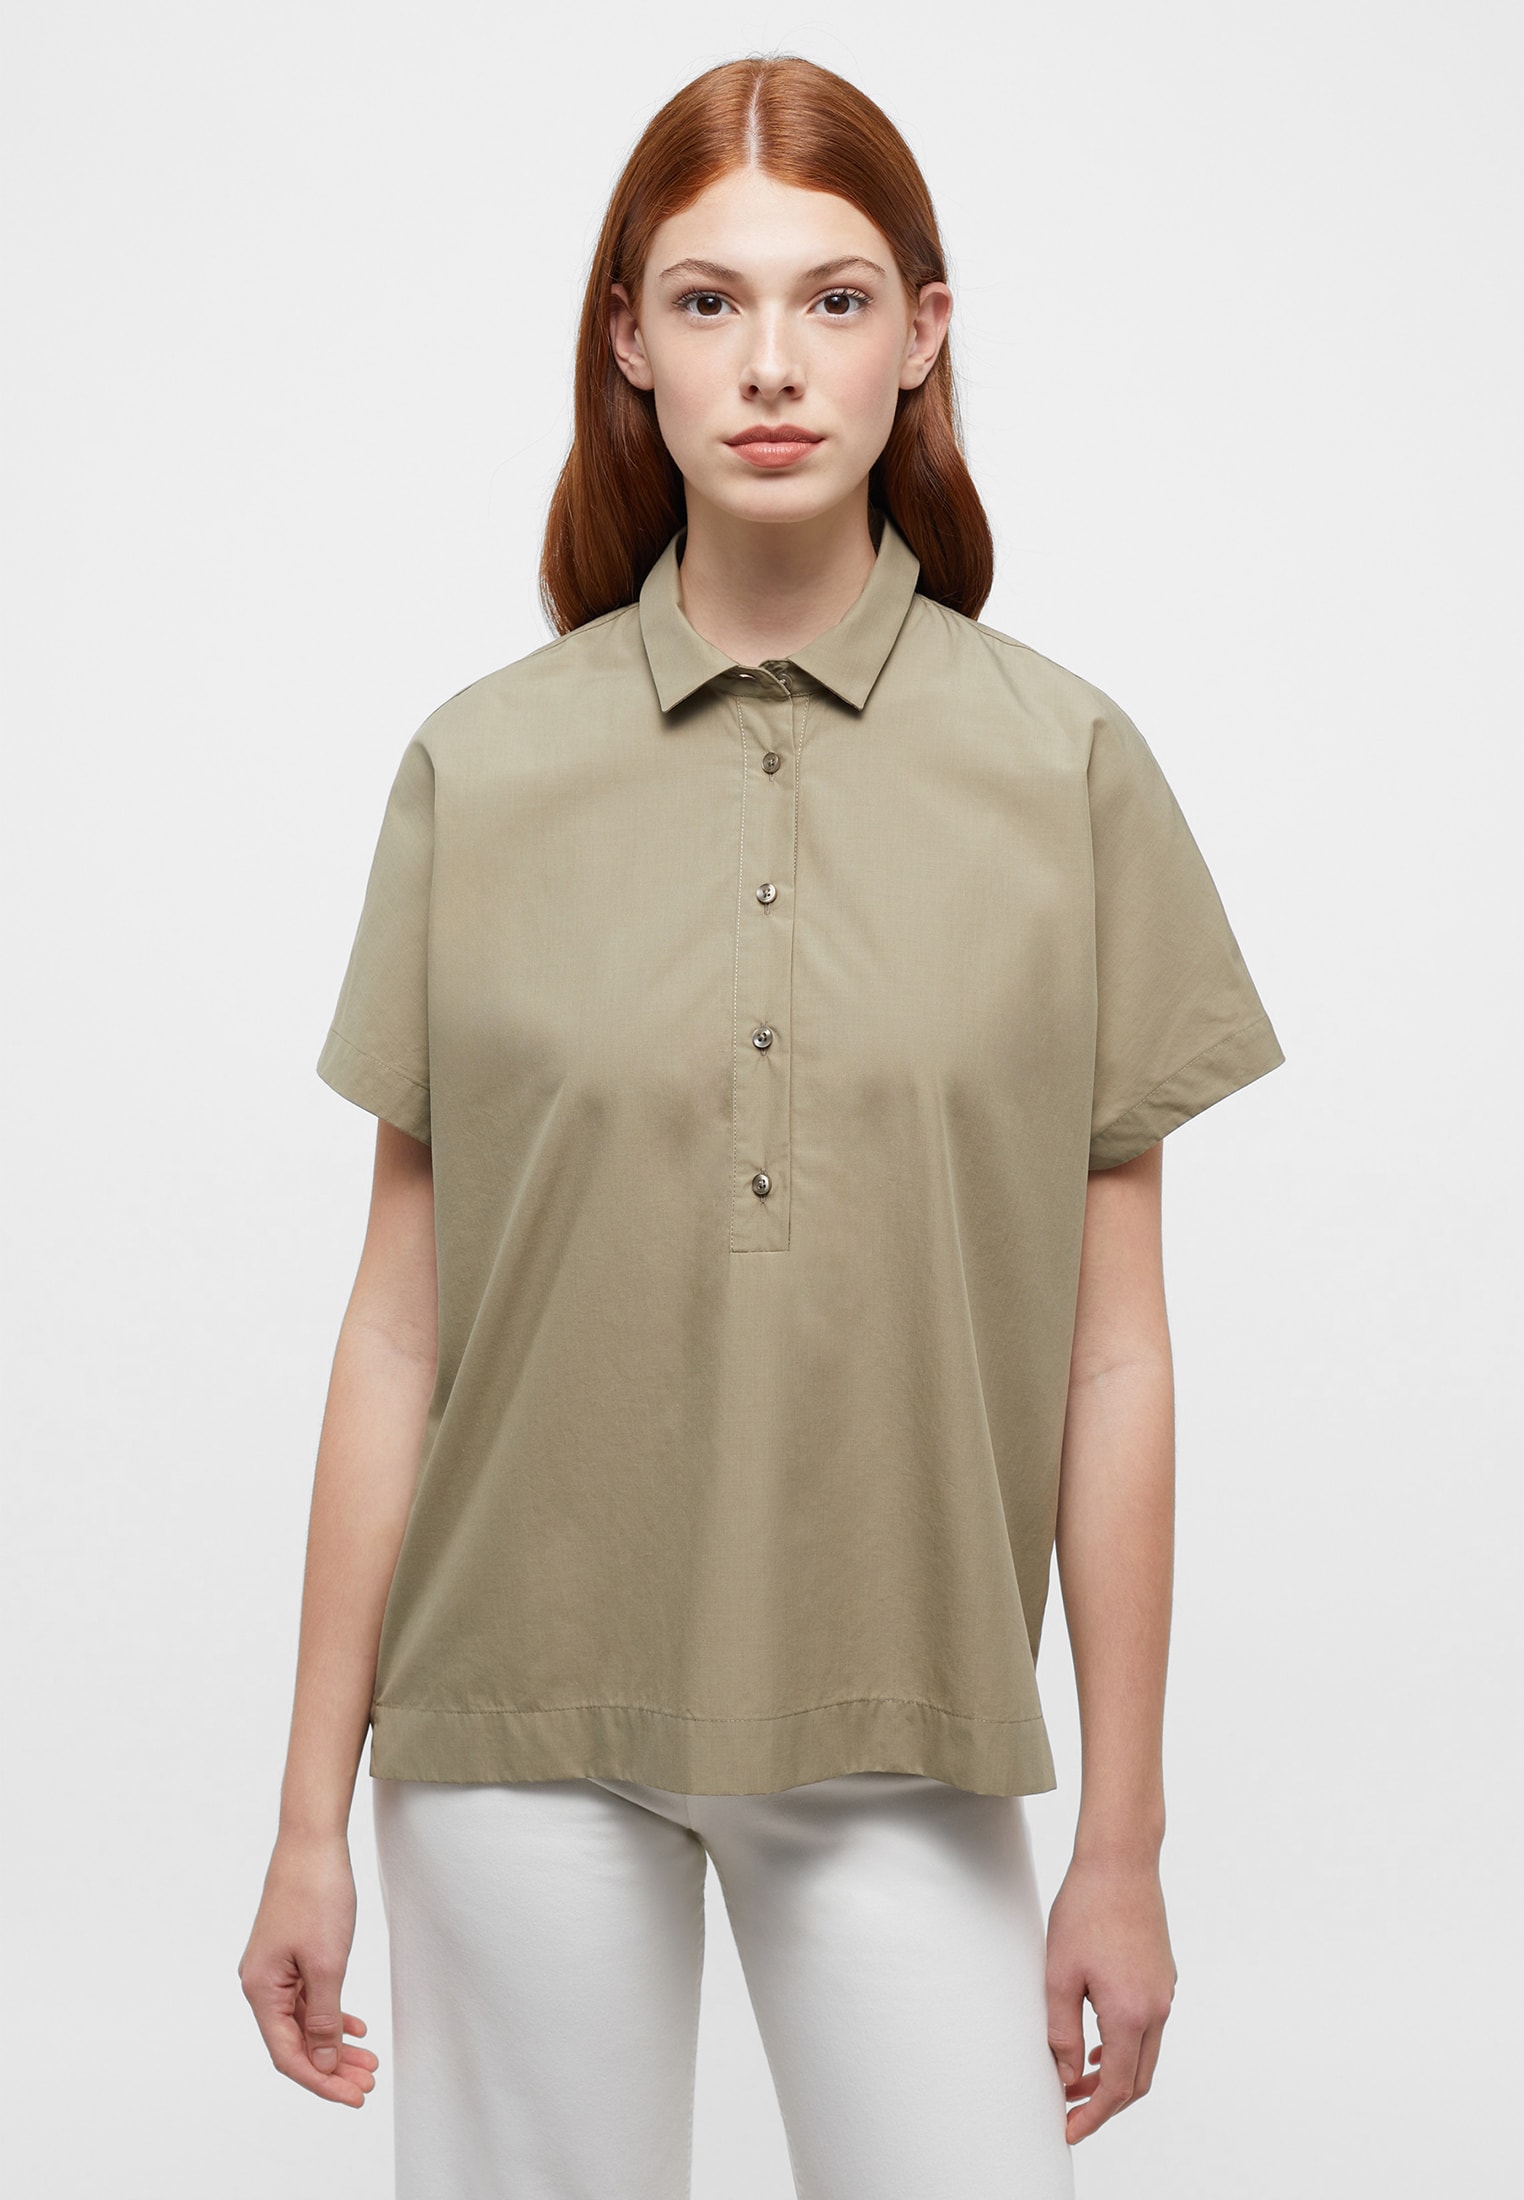 T-shirt blouse in olive plain